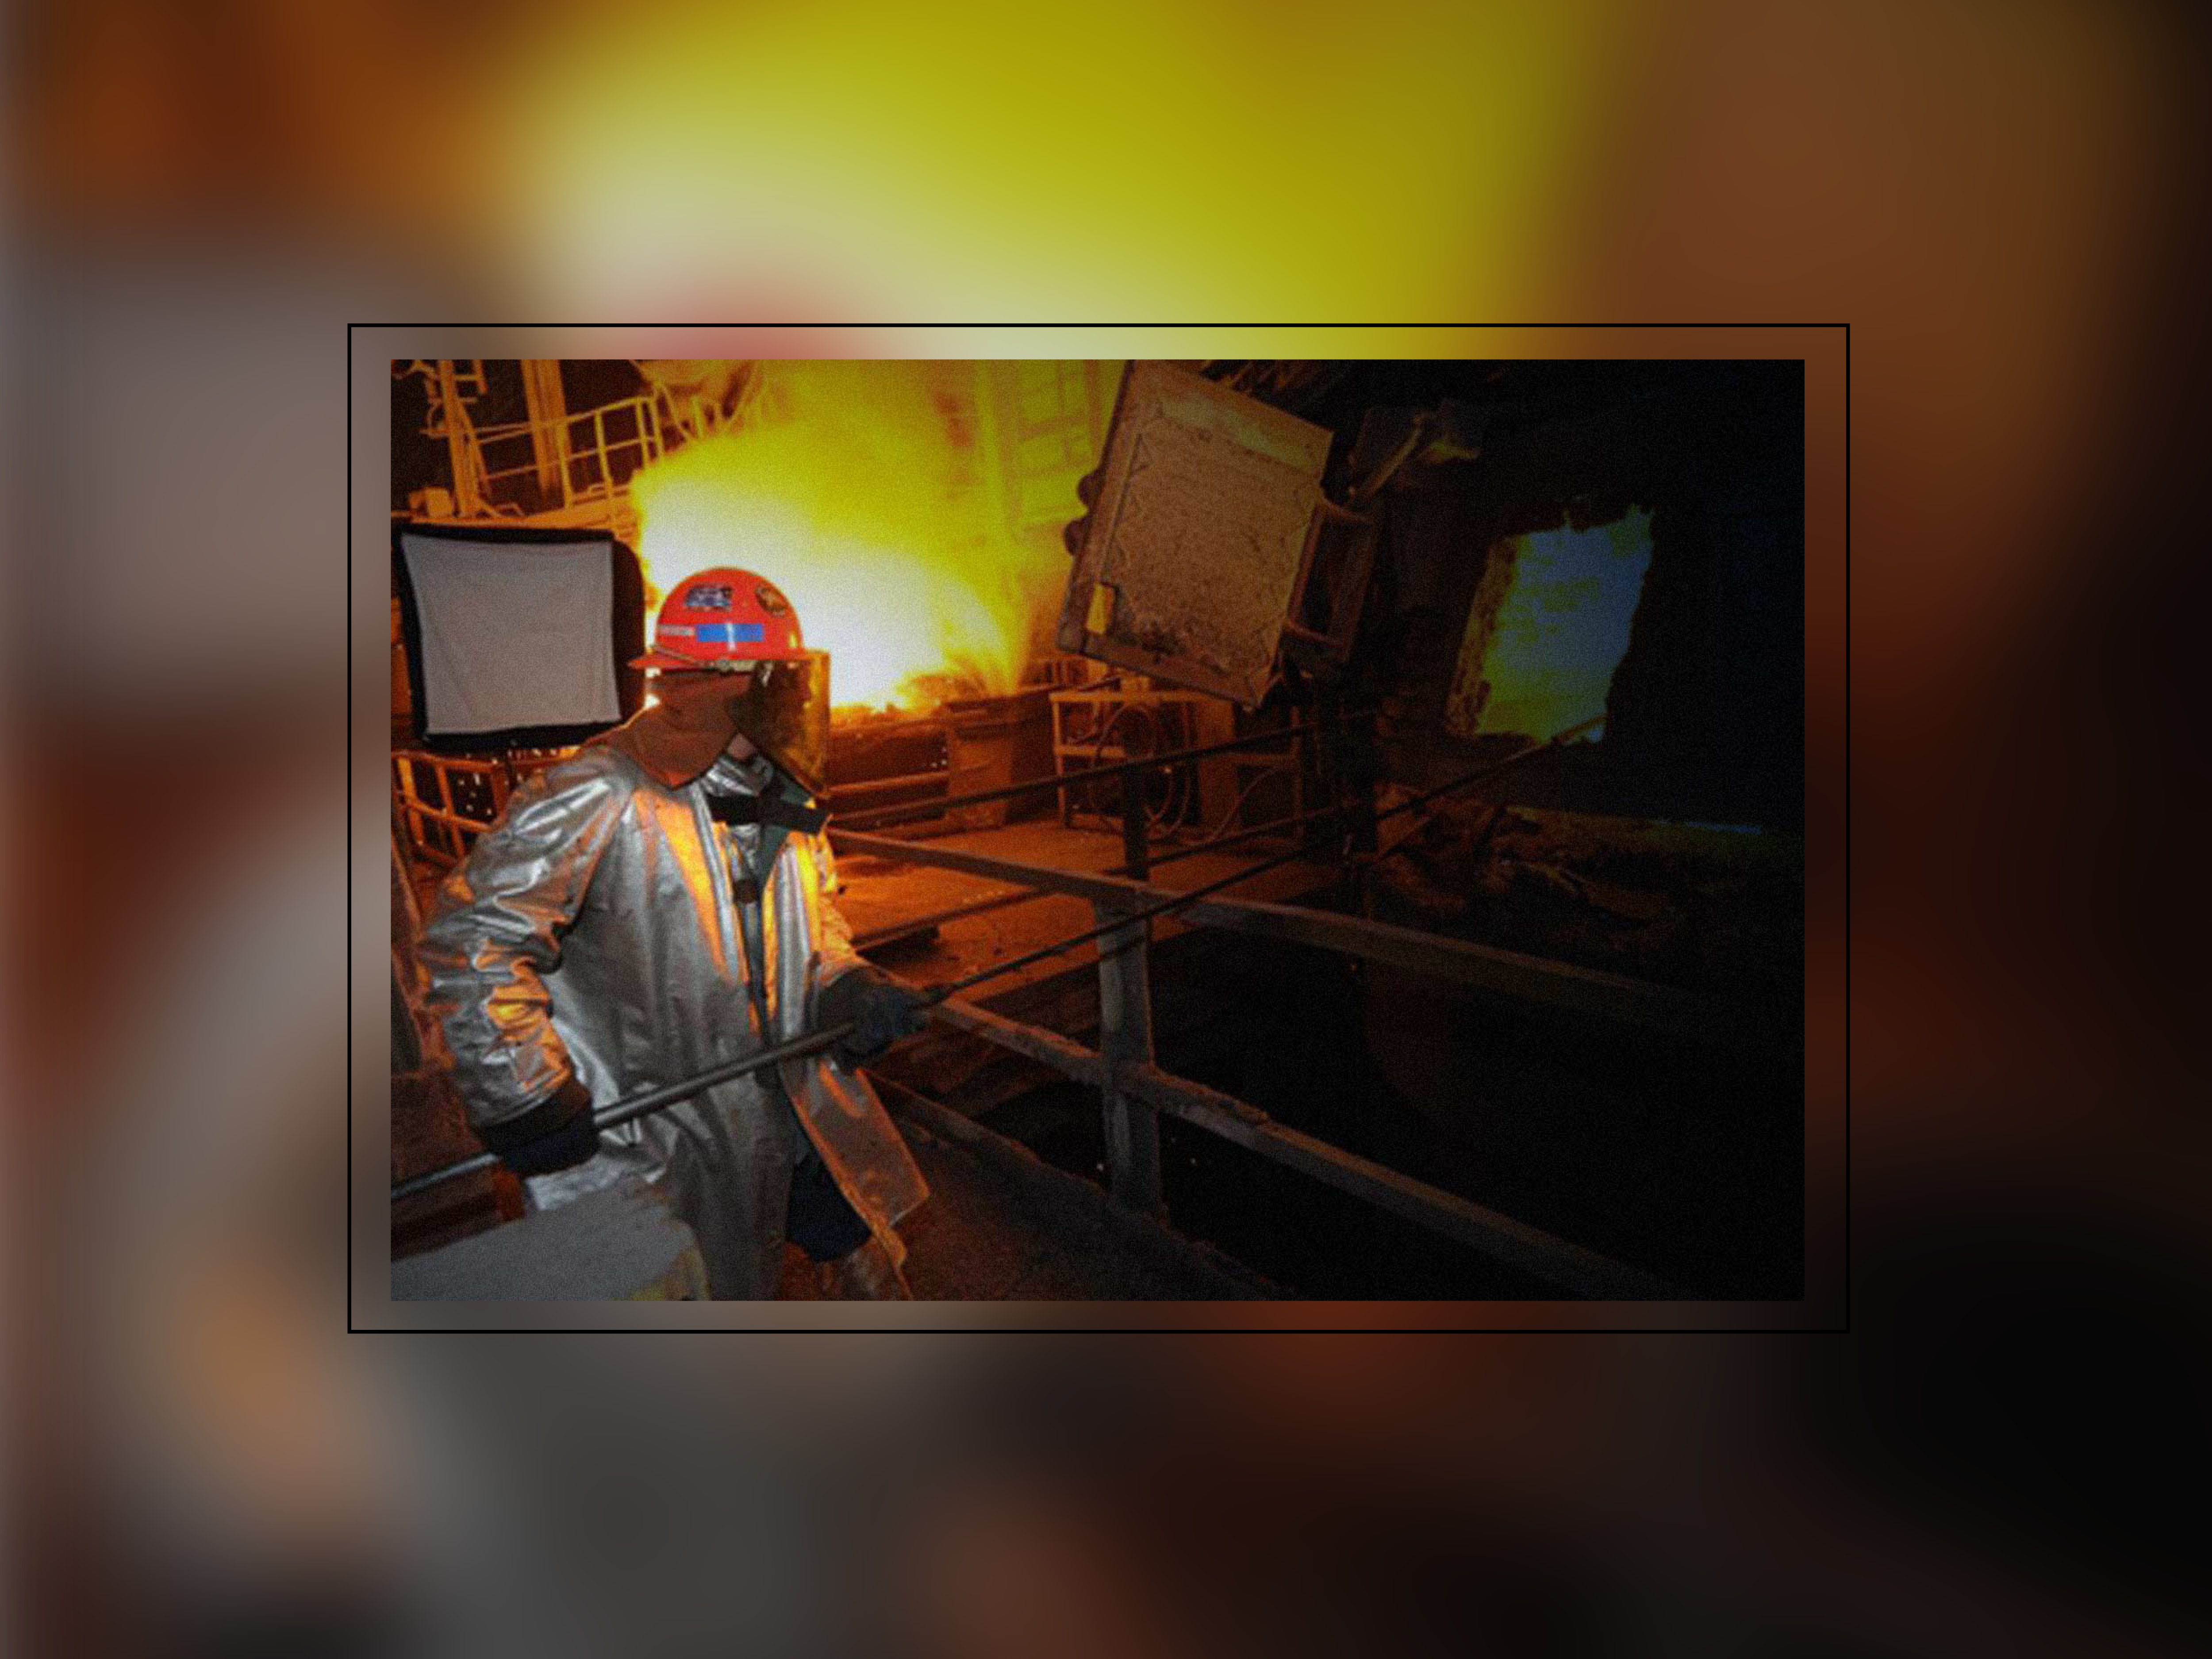 A steel worker in full safety gear working in front of a blast furnace.